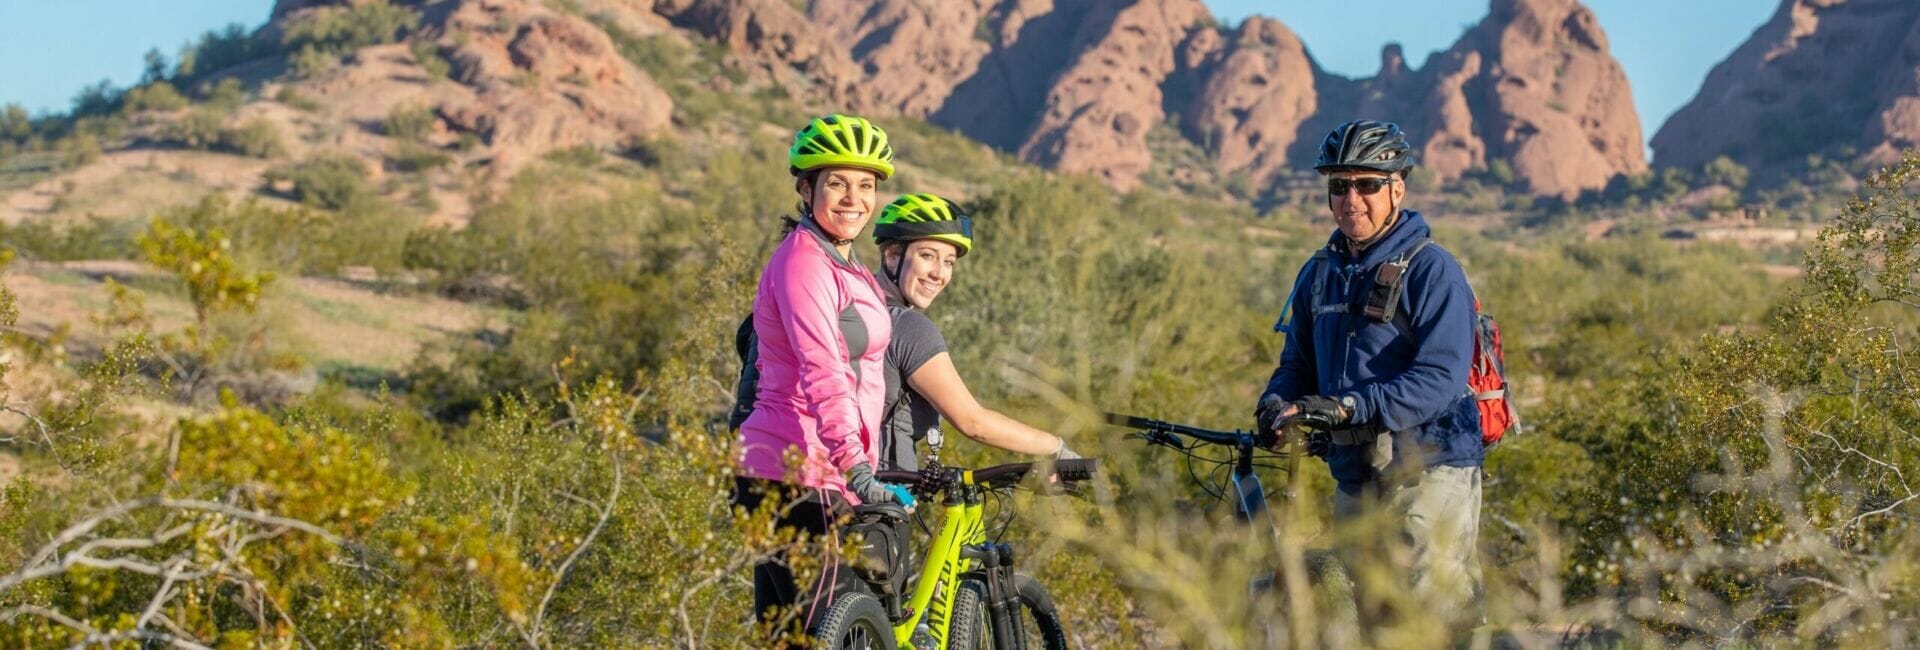 Bike Ride Papago Park in Tempe Arizona